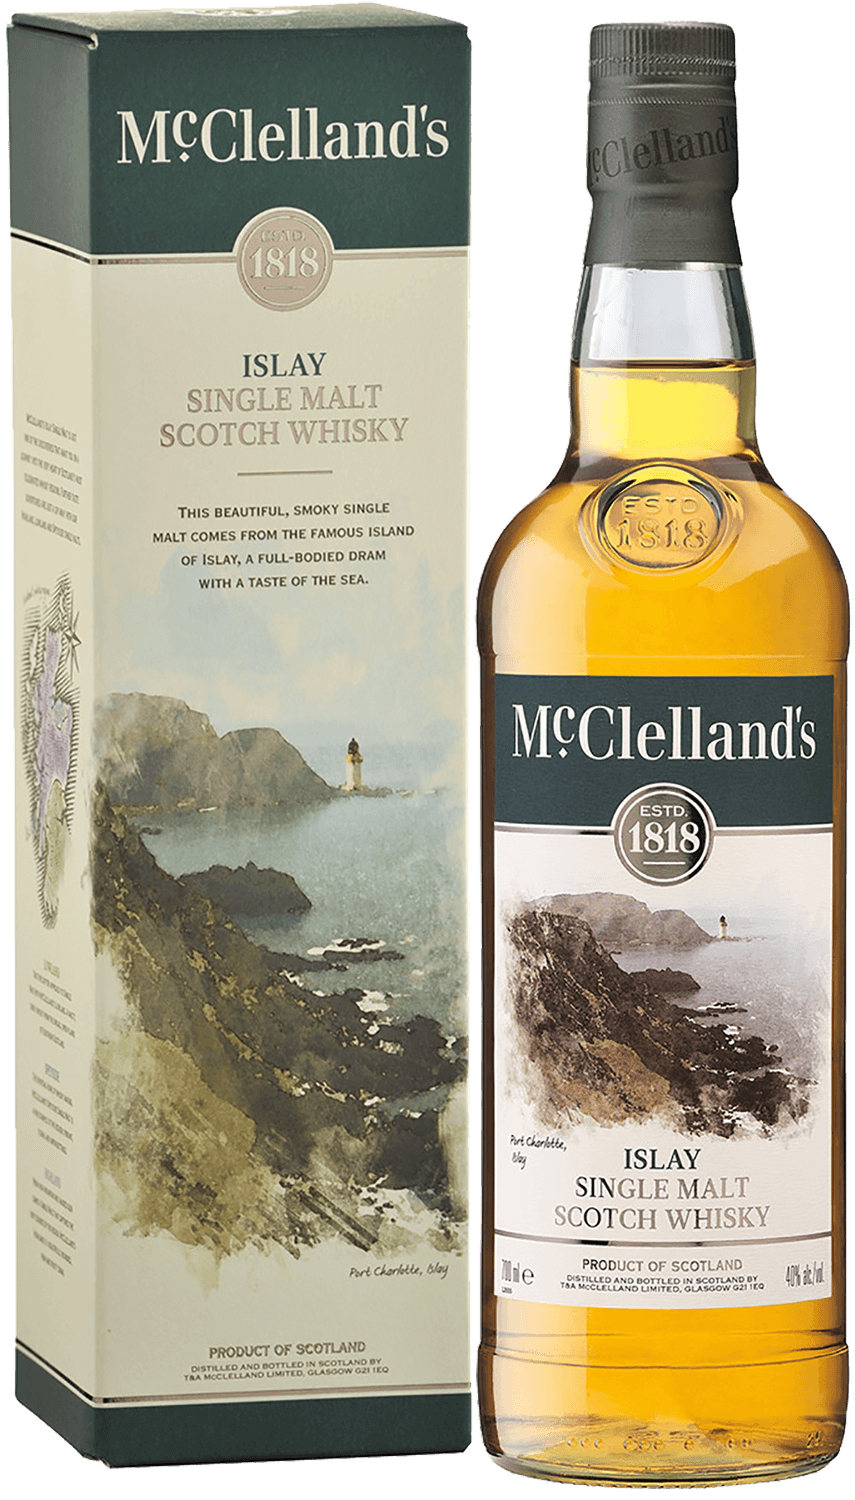 McClelland's Islay single malt scotch whisky (gift box) ardbeg traigh bhan 19 years old islay single malt scotch whisky gift box